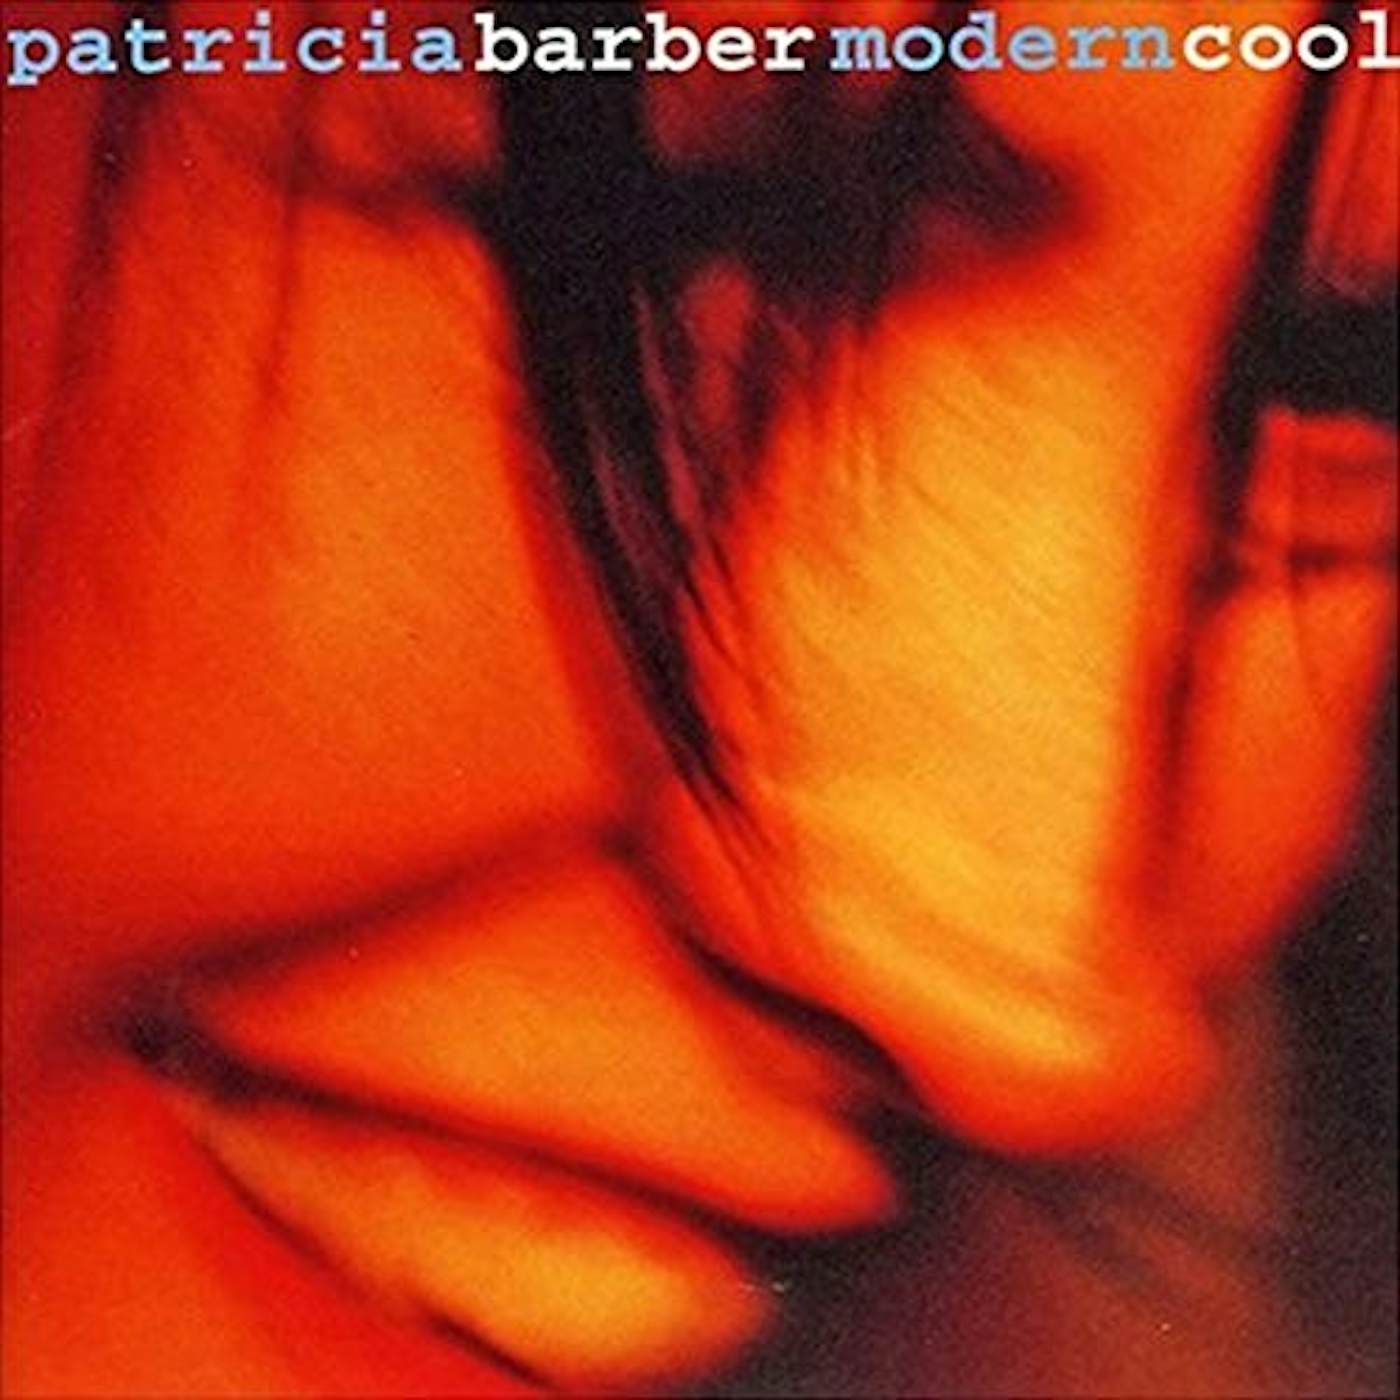 Patricia Barber Modern Cool Vinyl Record